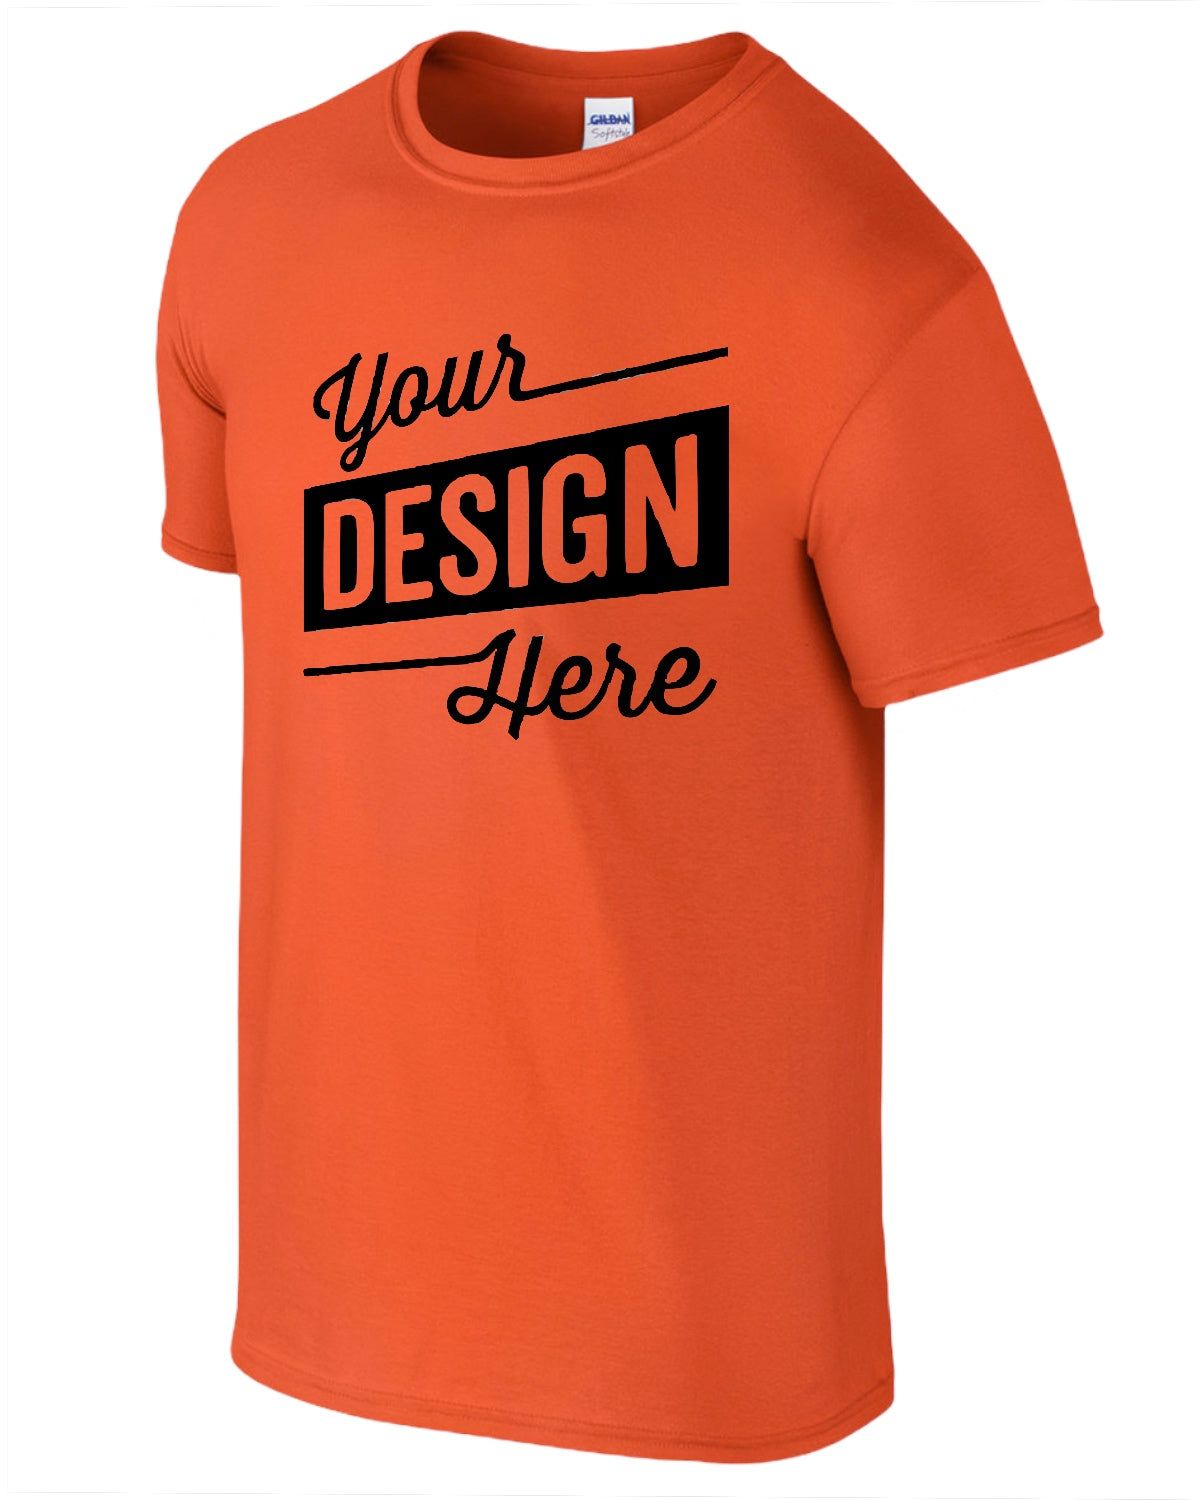 orange t shirt template